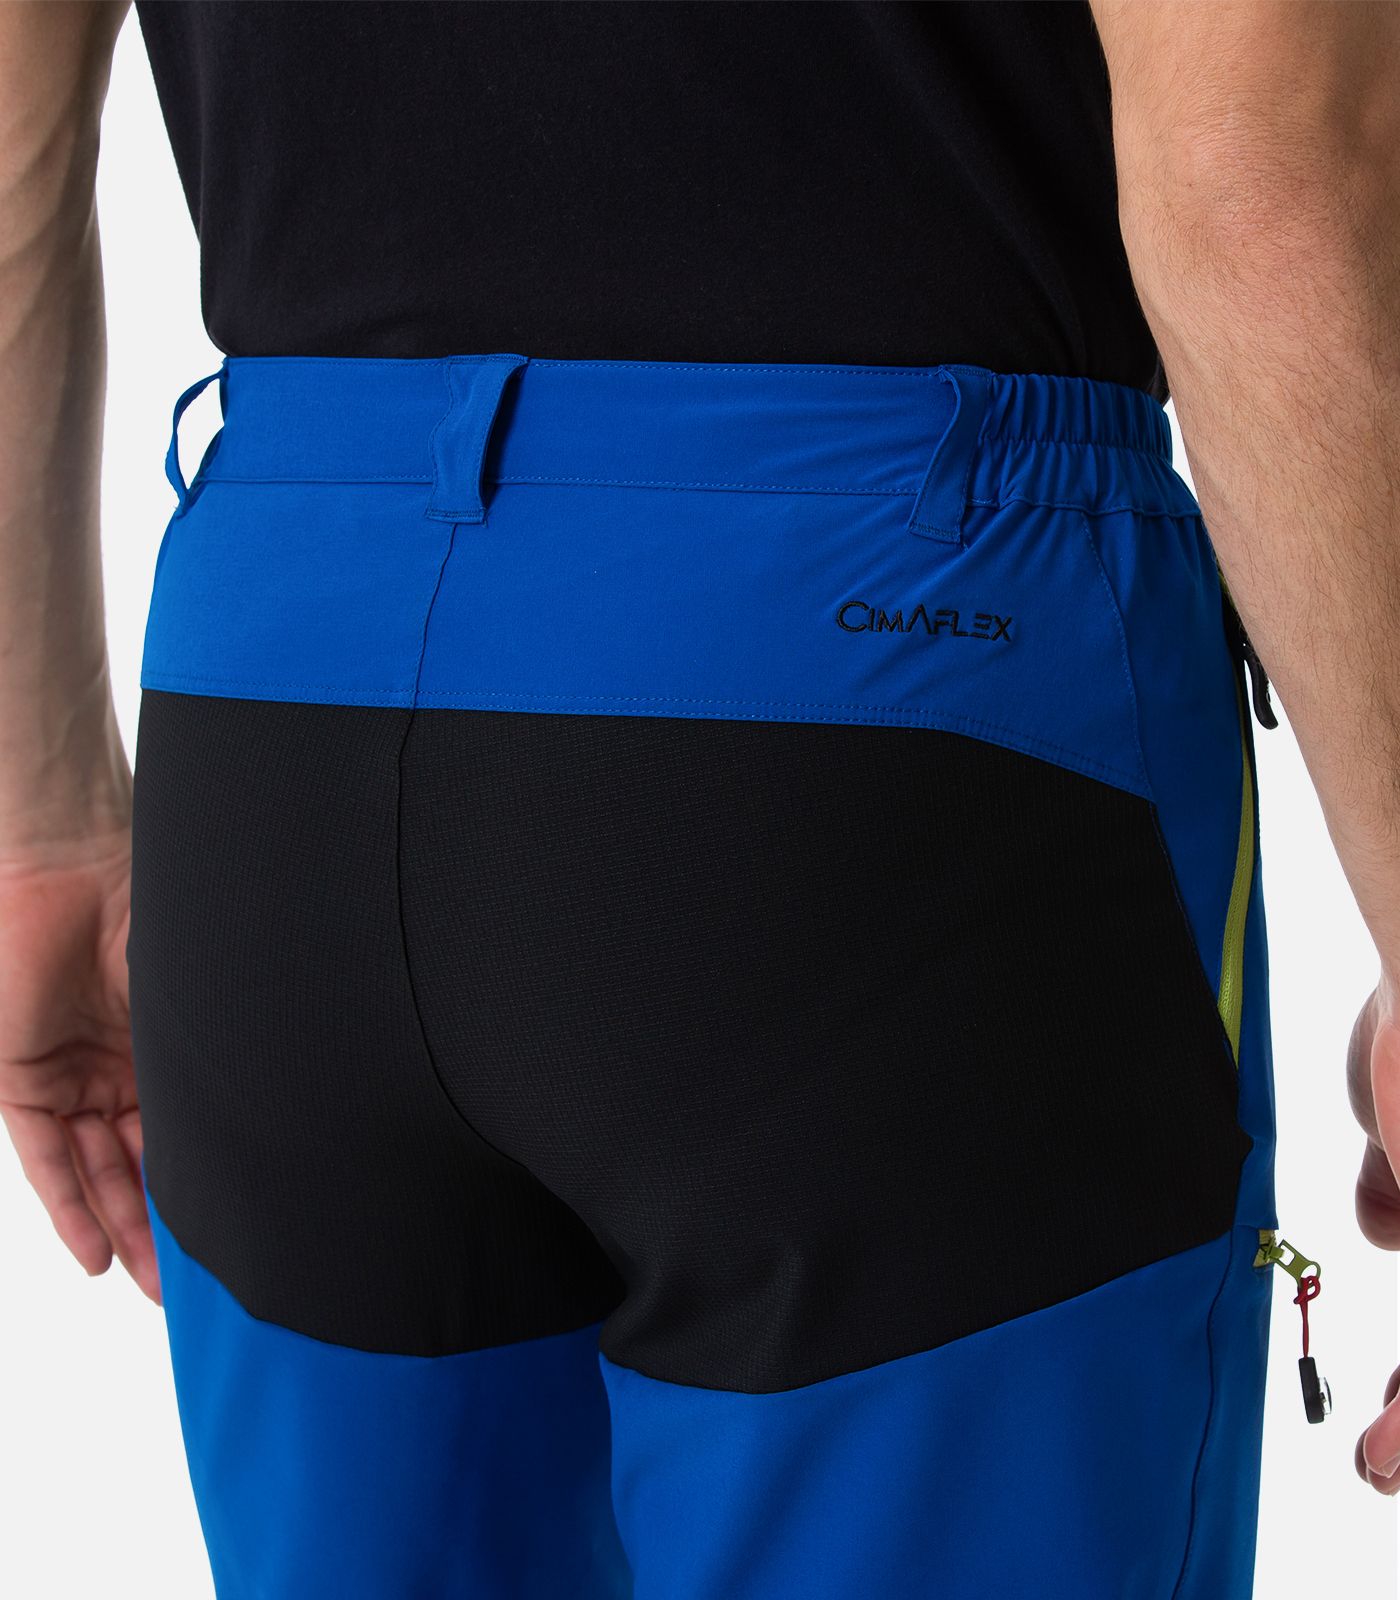 Pantaloncini elasticizzati con rinforzi in Kevlar®